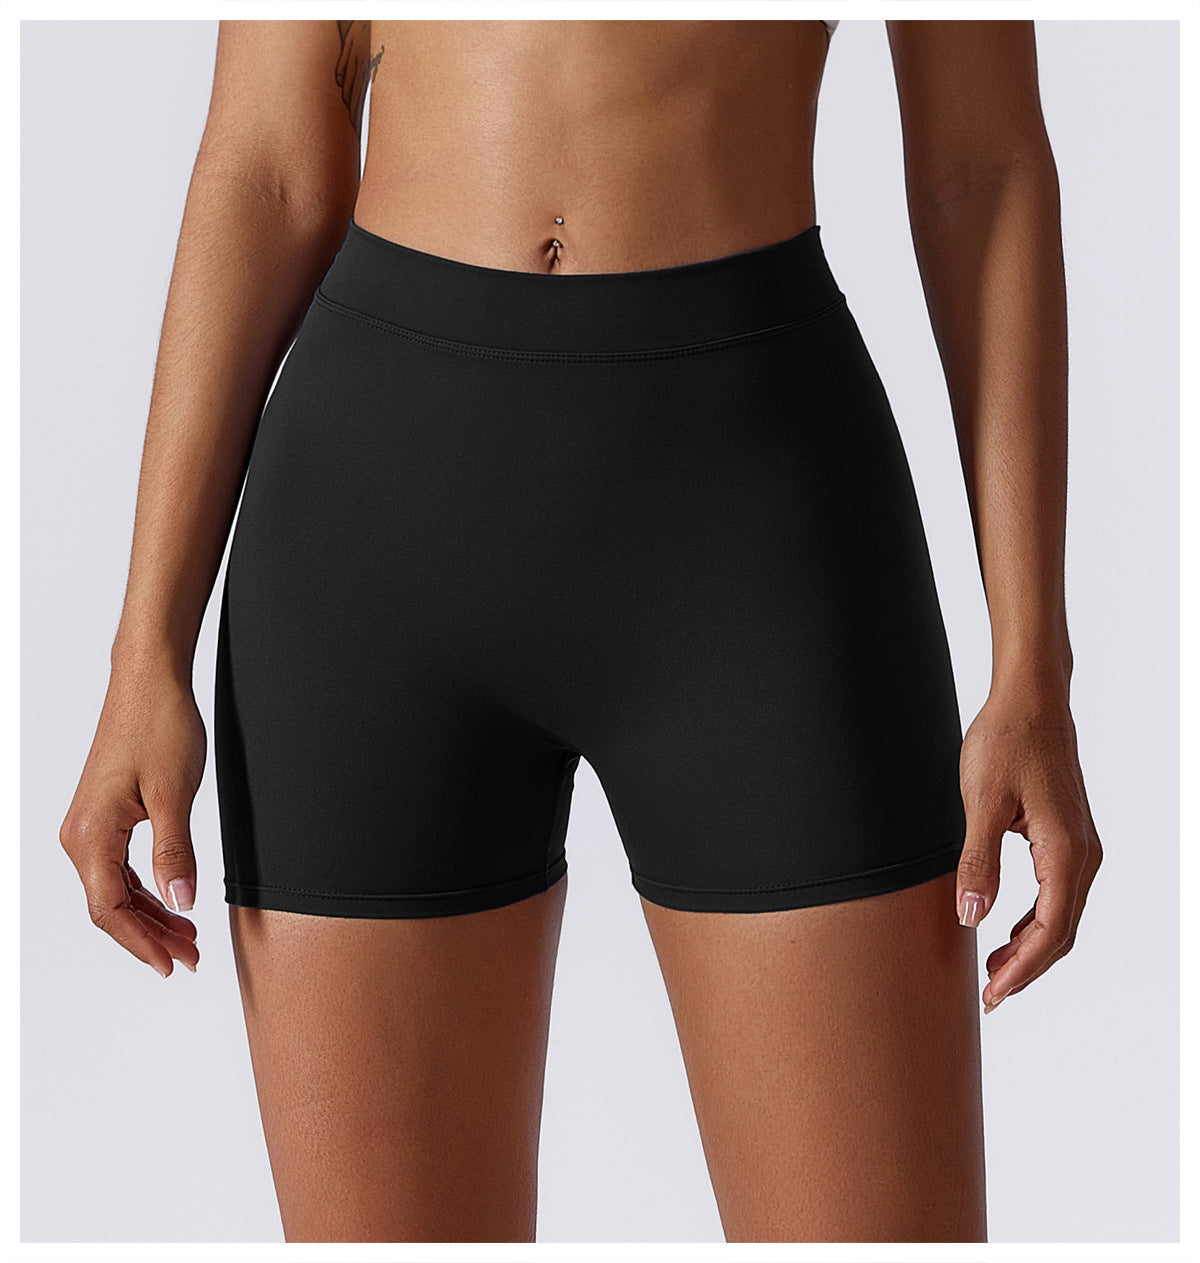 Brushed yoga pants hip-lifting fitness pants outerwear running sports pants women 8175